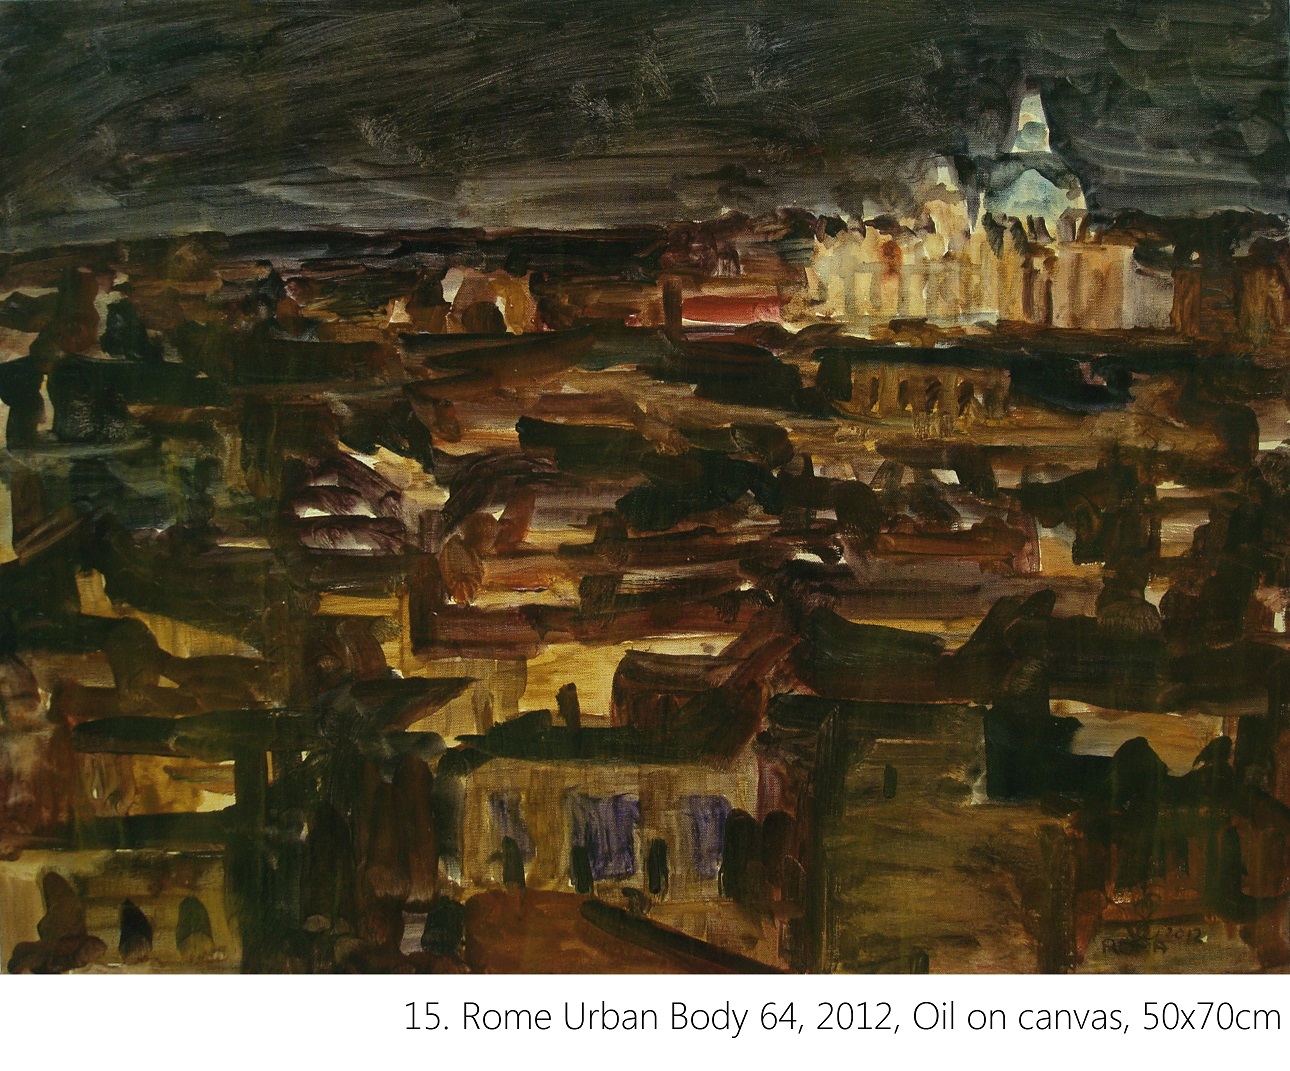 15. Rome Urban Body 64, 2012, Oil on canvas, 50x70cm